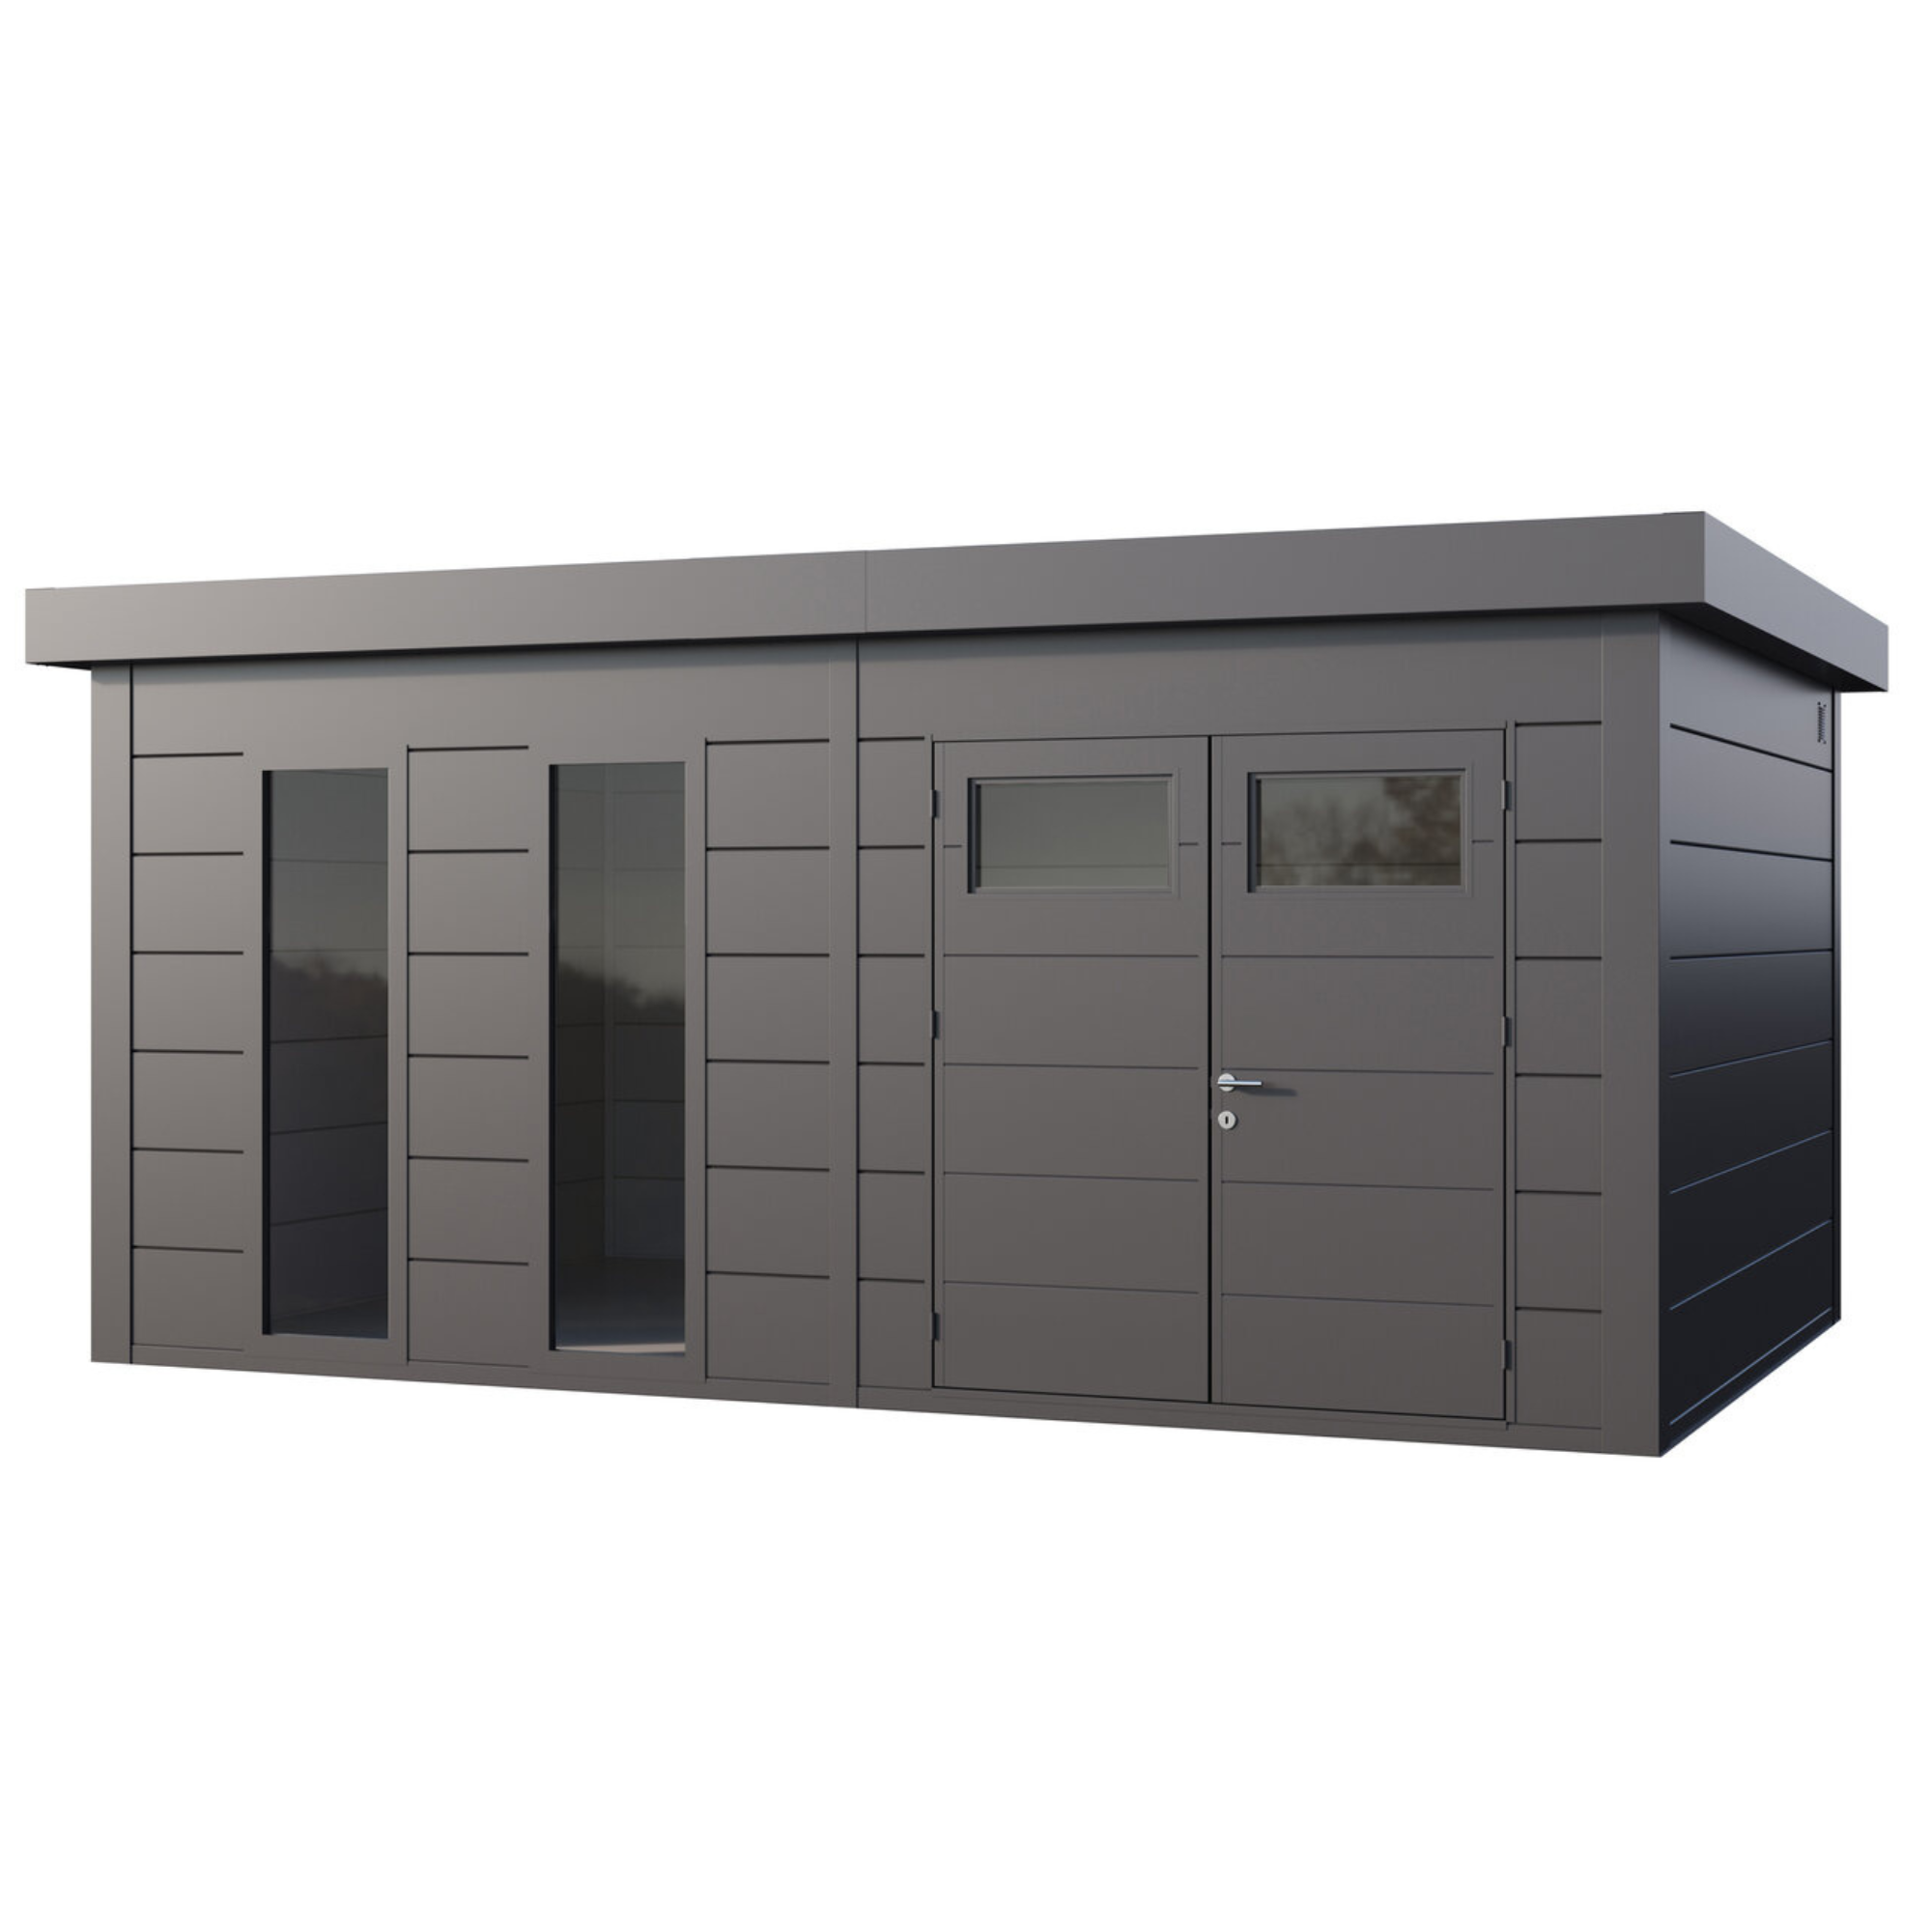 Telluria 18x12ft Eleganto Premier Steel Shed Office - 5.4m x 3.6m